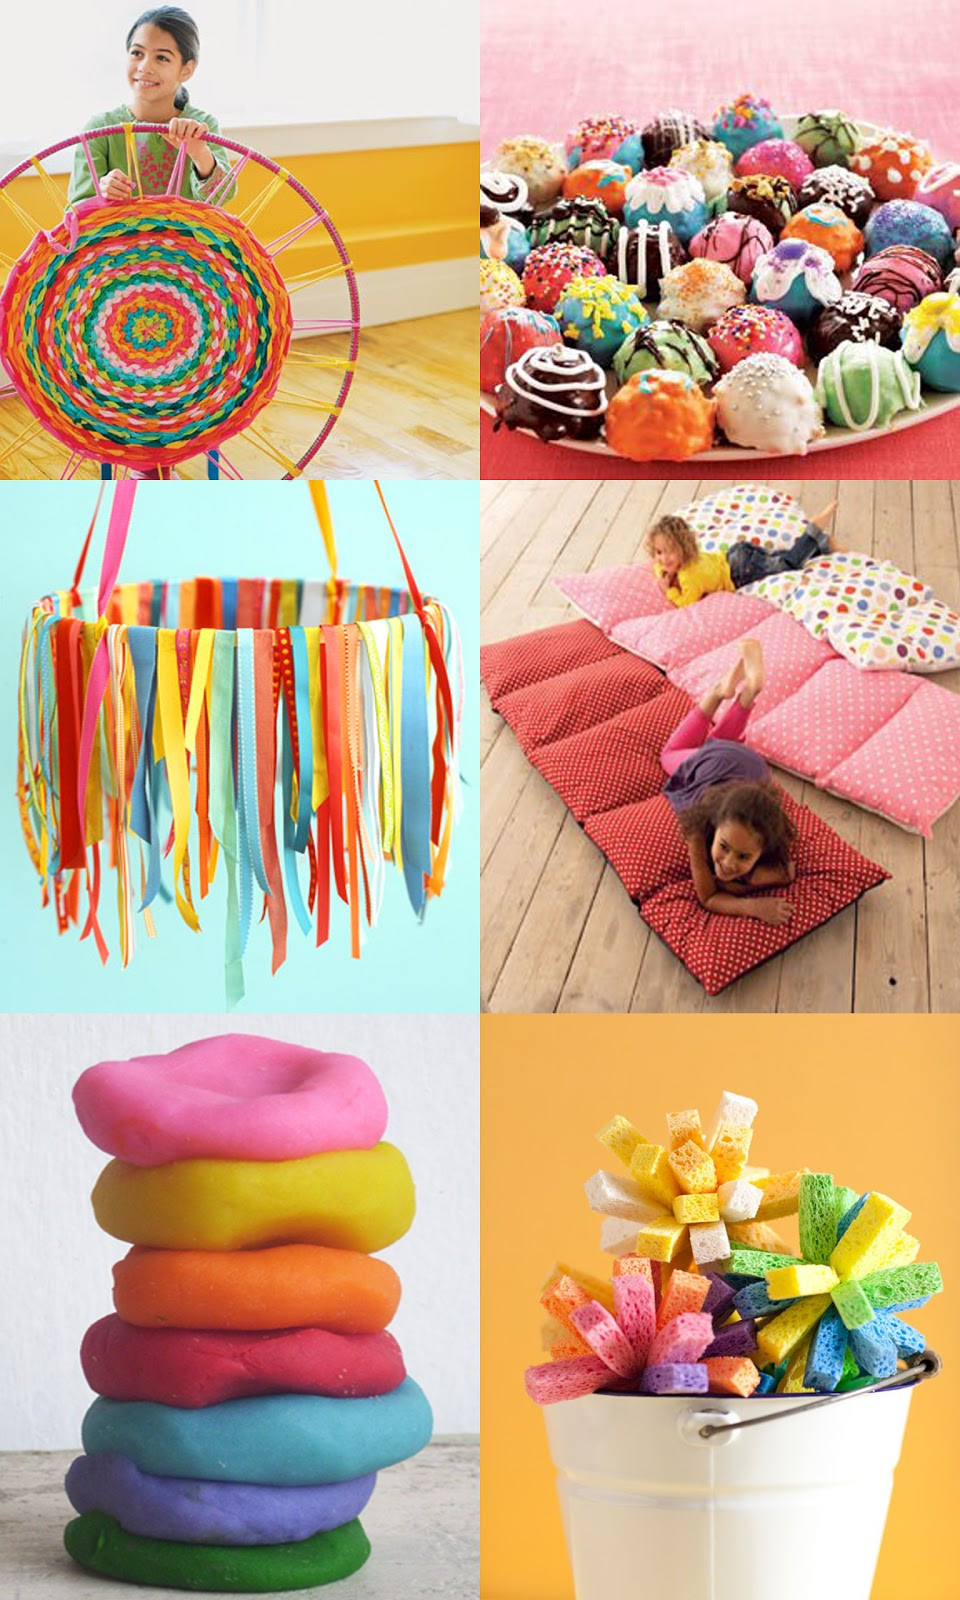 Best ideas about Summertime Craft Ideas
. Save or Pin WONDER WREN Super cute Summer Crafts Now.